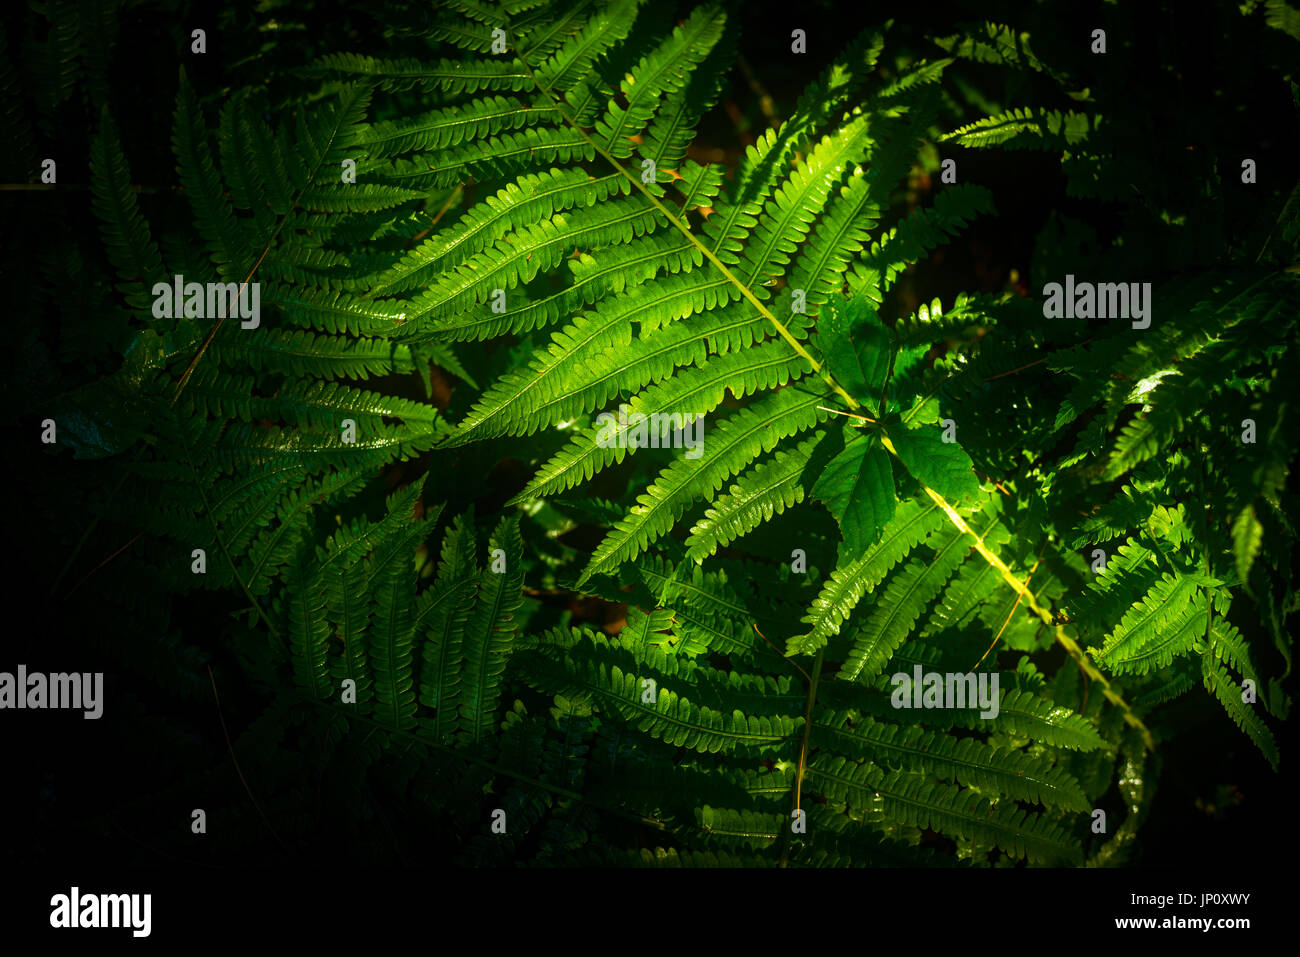 Ferns in the warm sunlight texture pattern Stock Photo